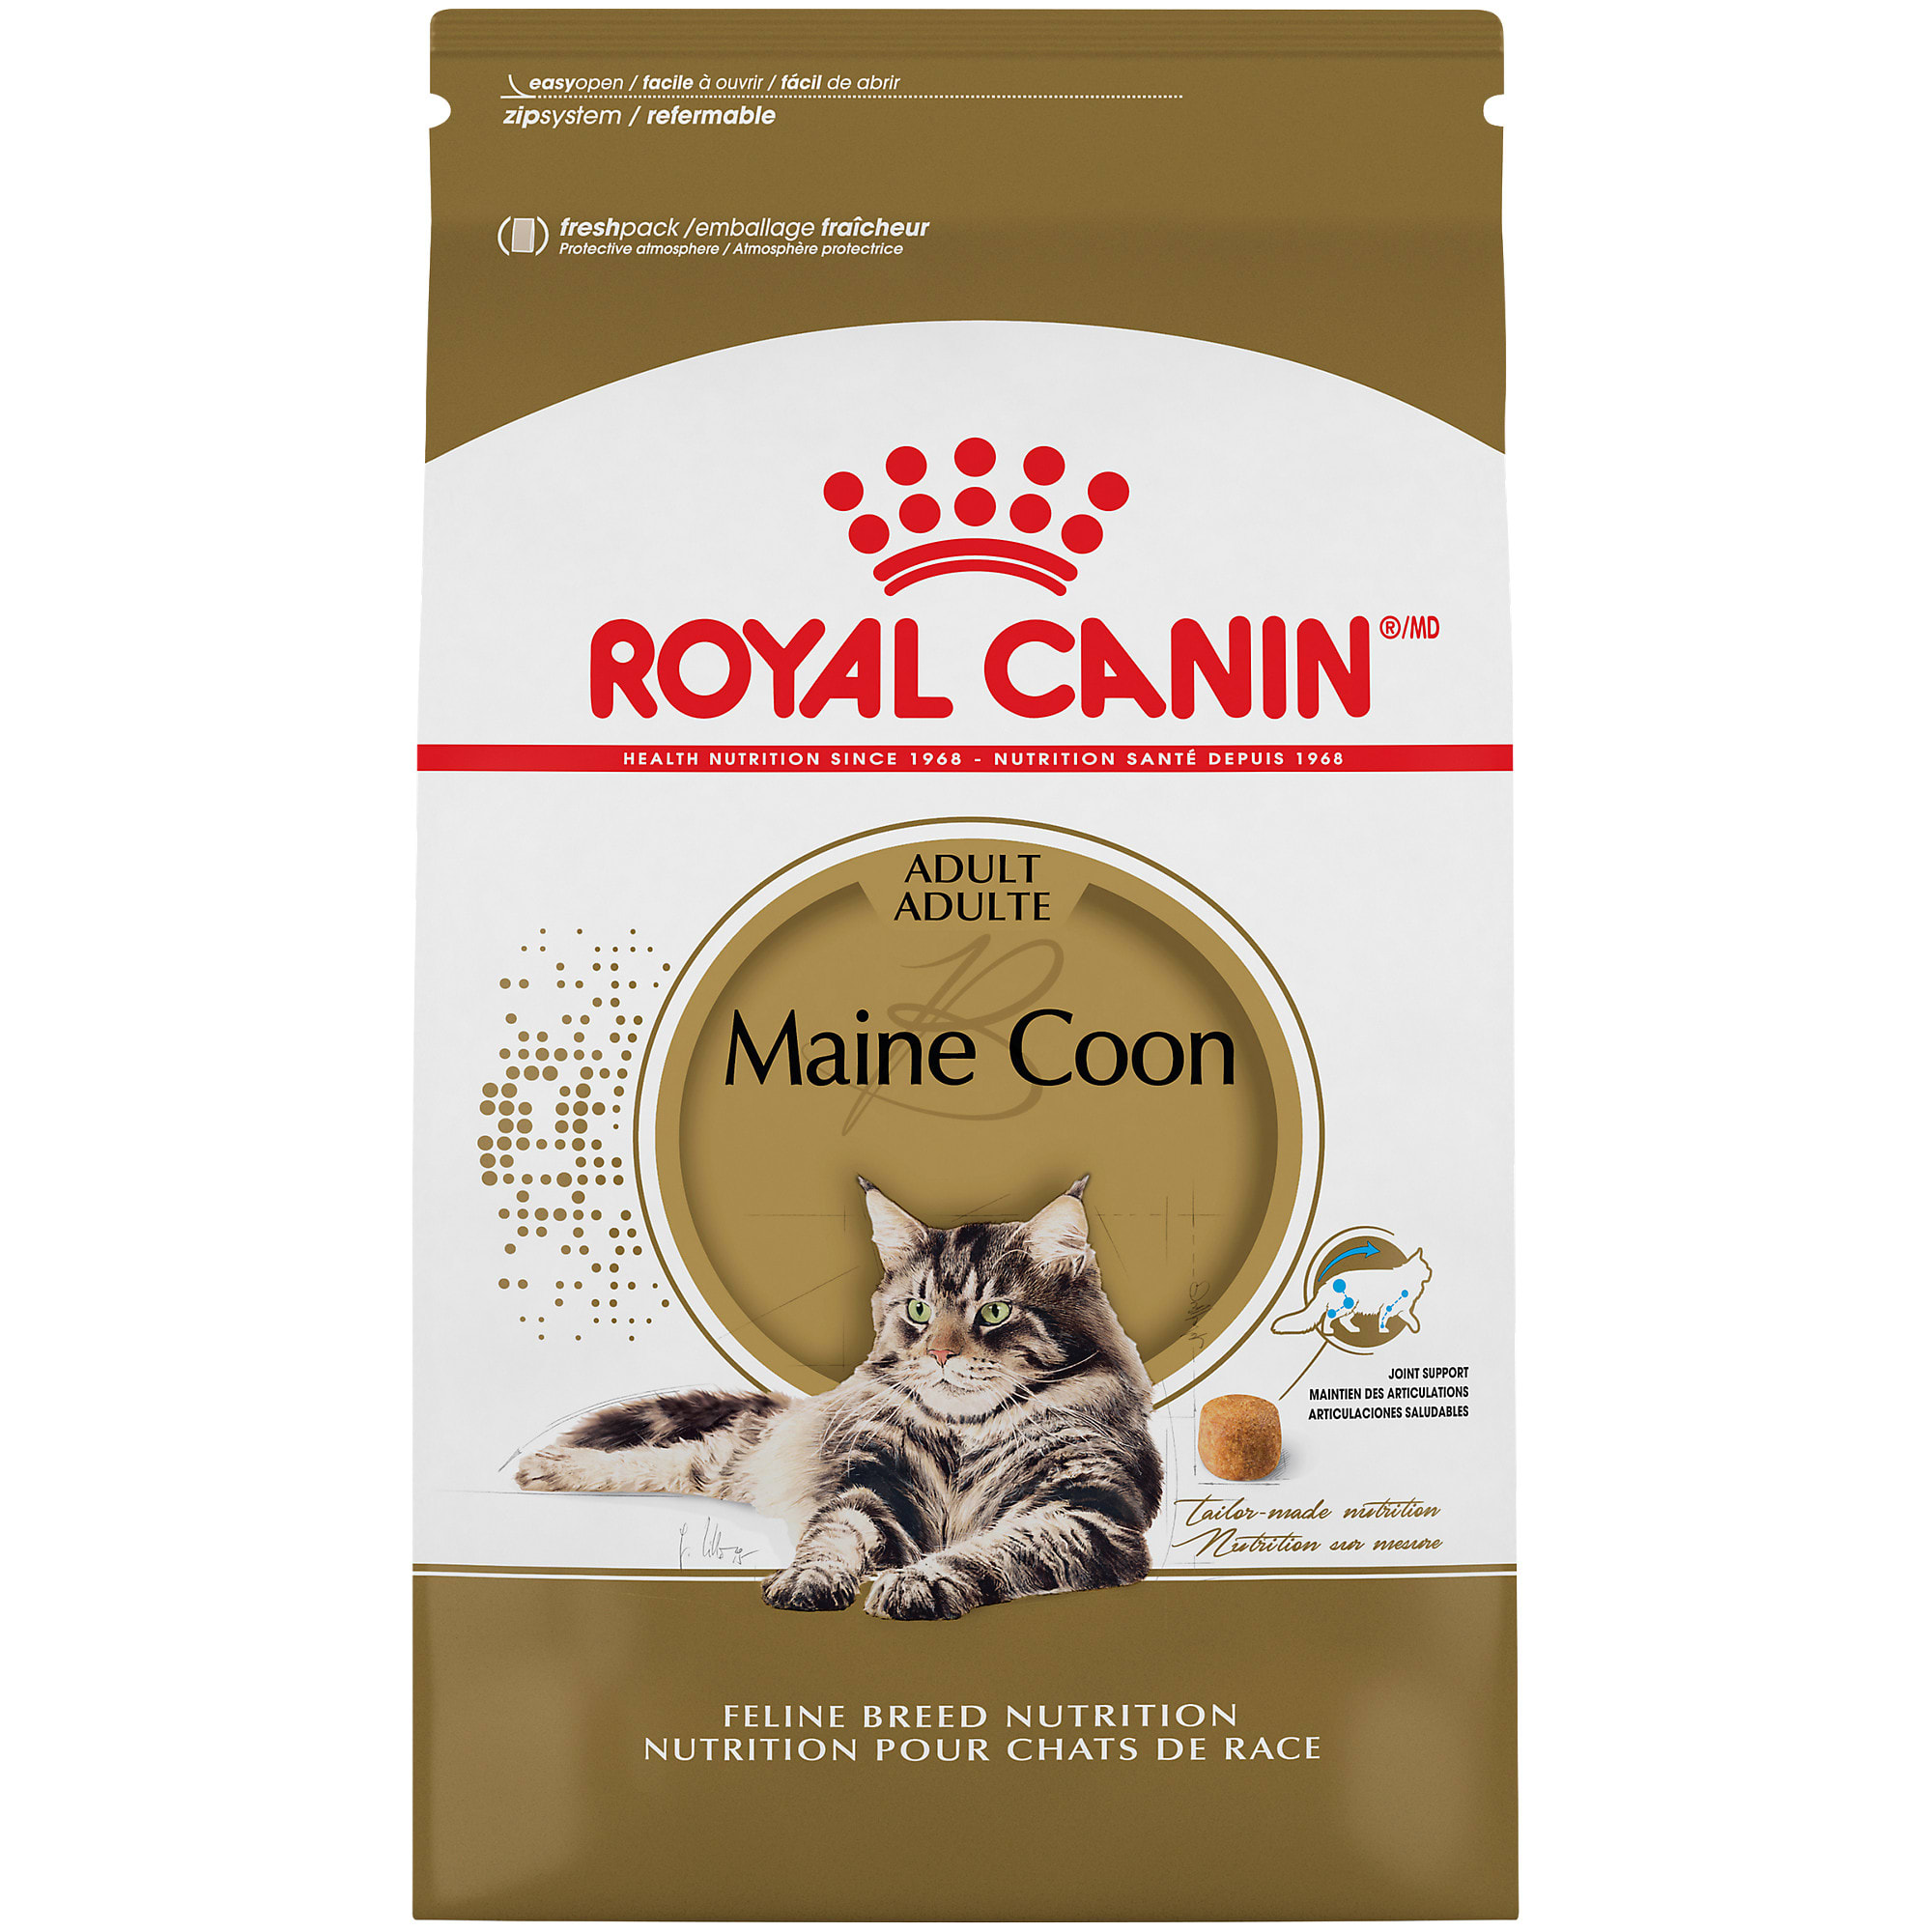 Maine Coon Cat Supplies